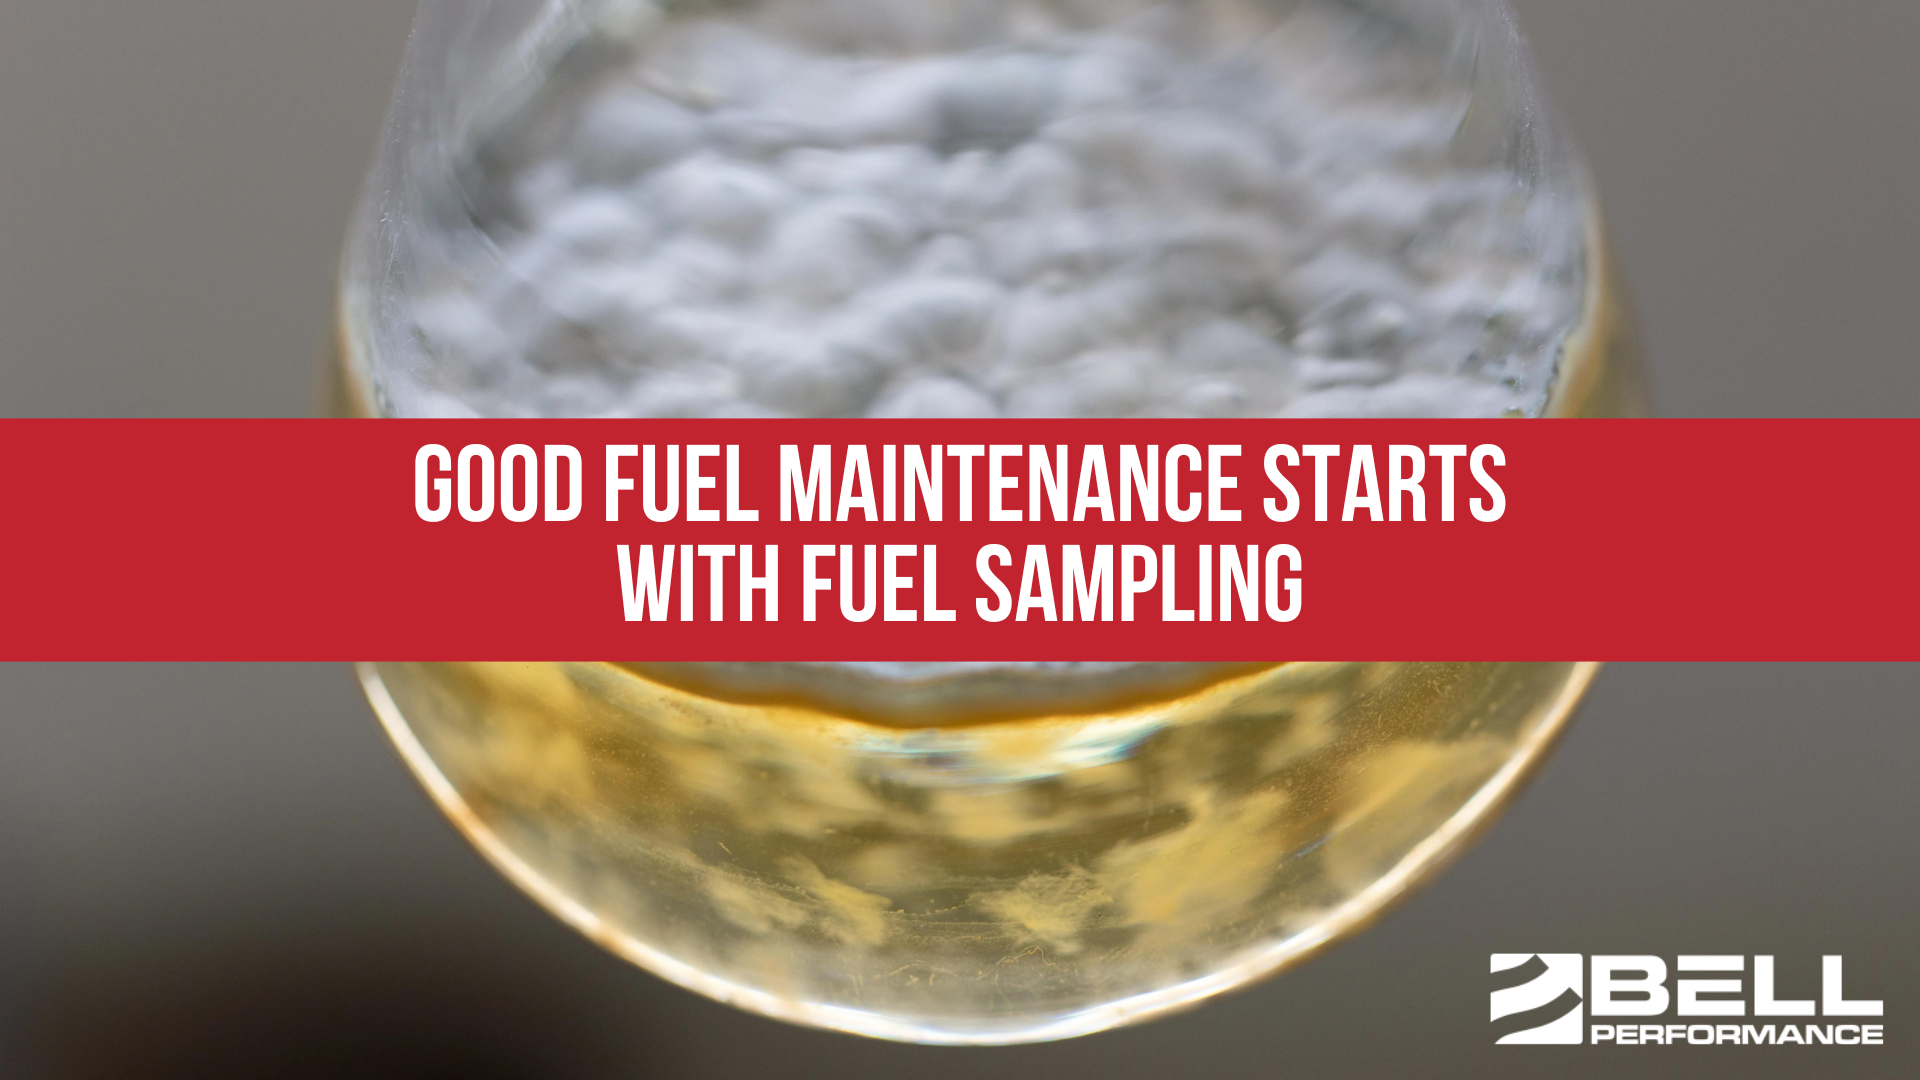 Good fuel maintenance starts with fuel sampling